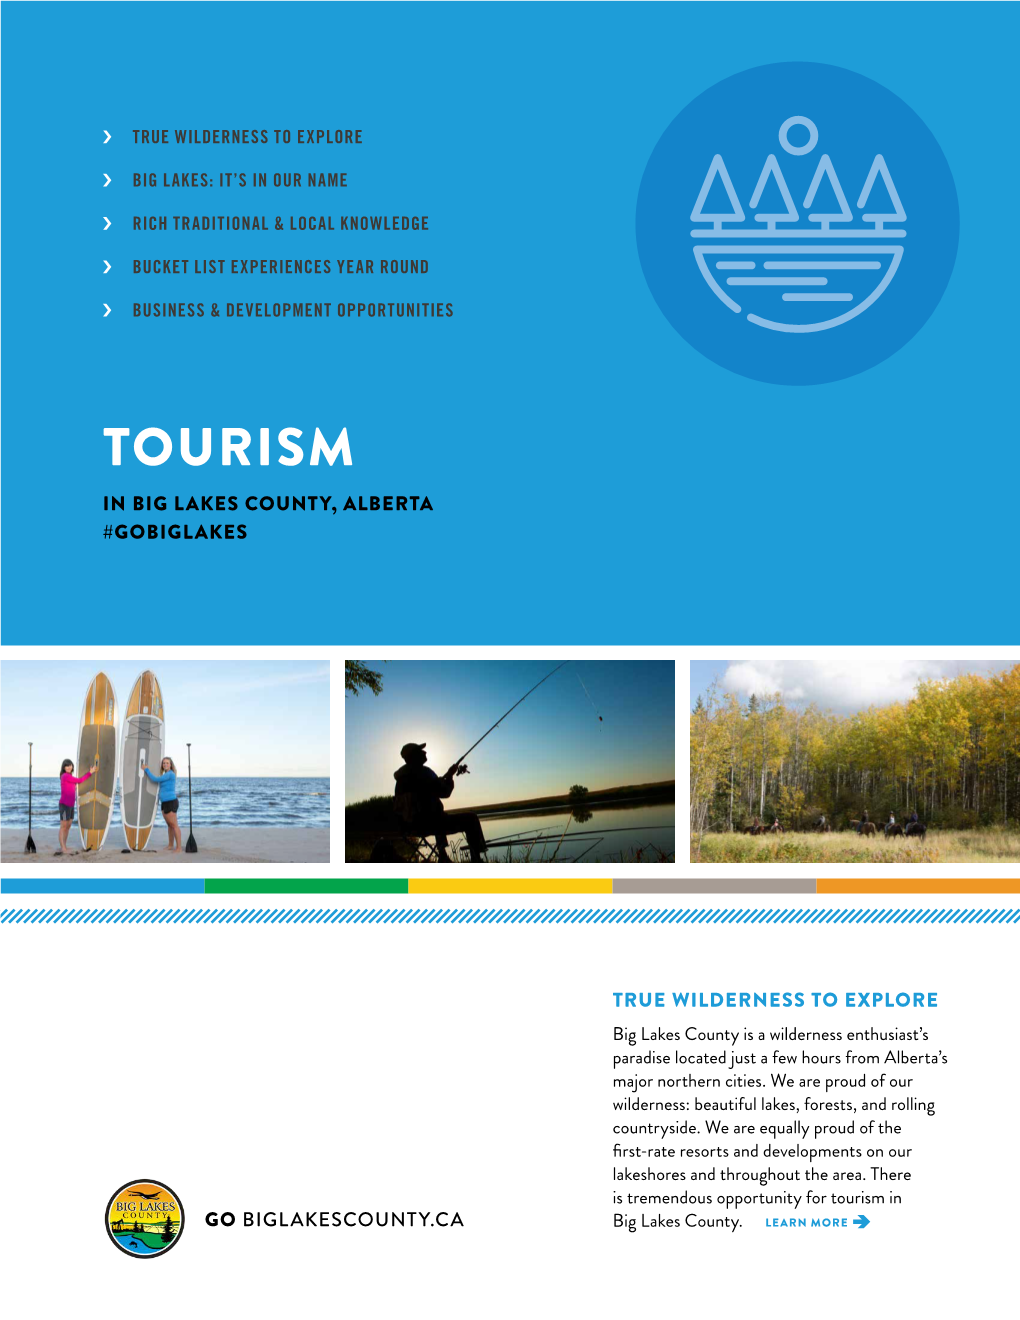 Tourism in Big Lakes County, Alberta #Gobiglakes